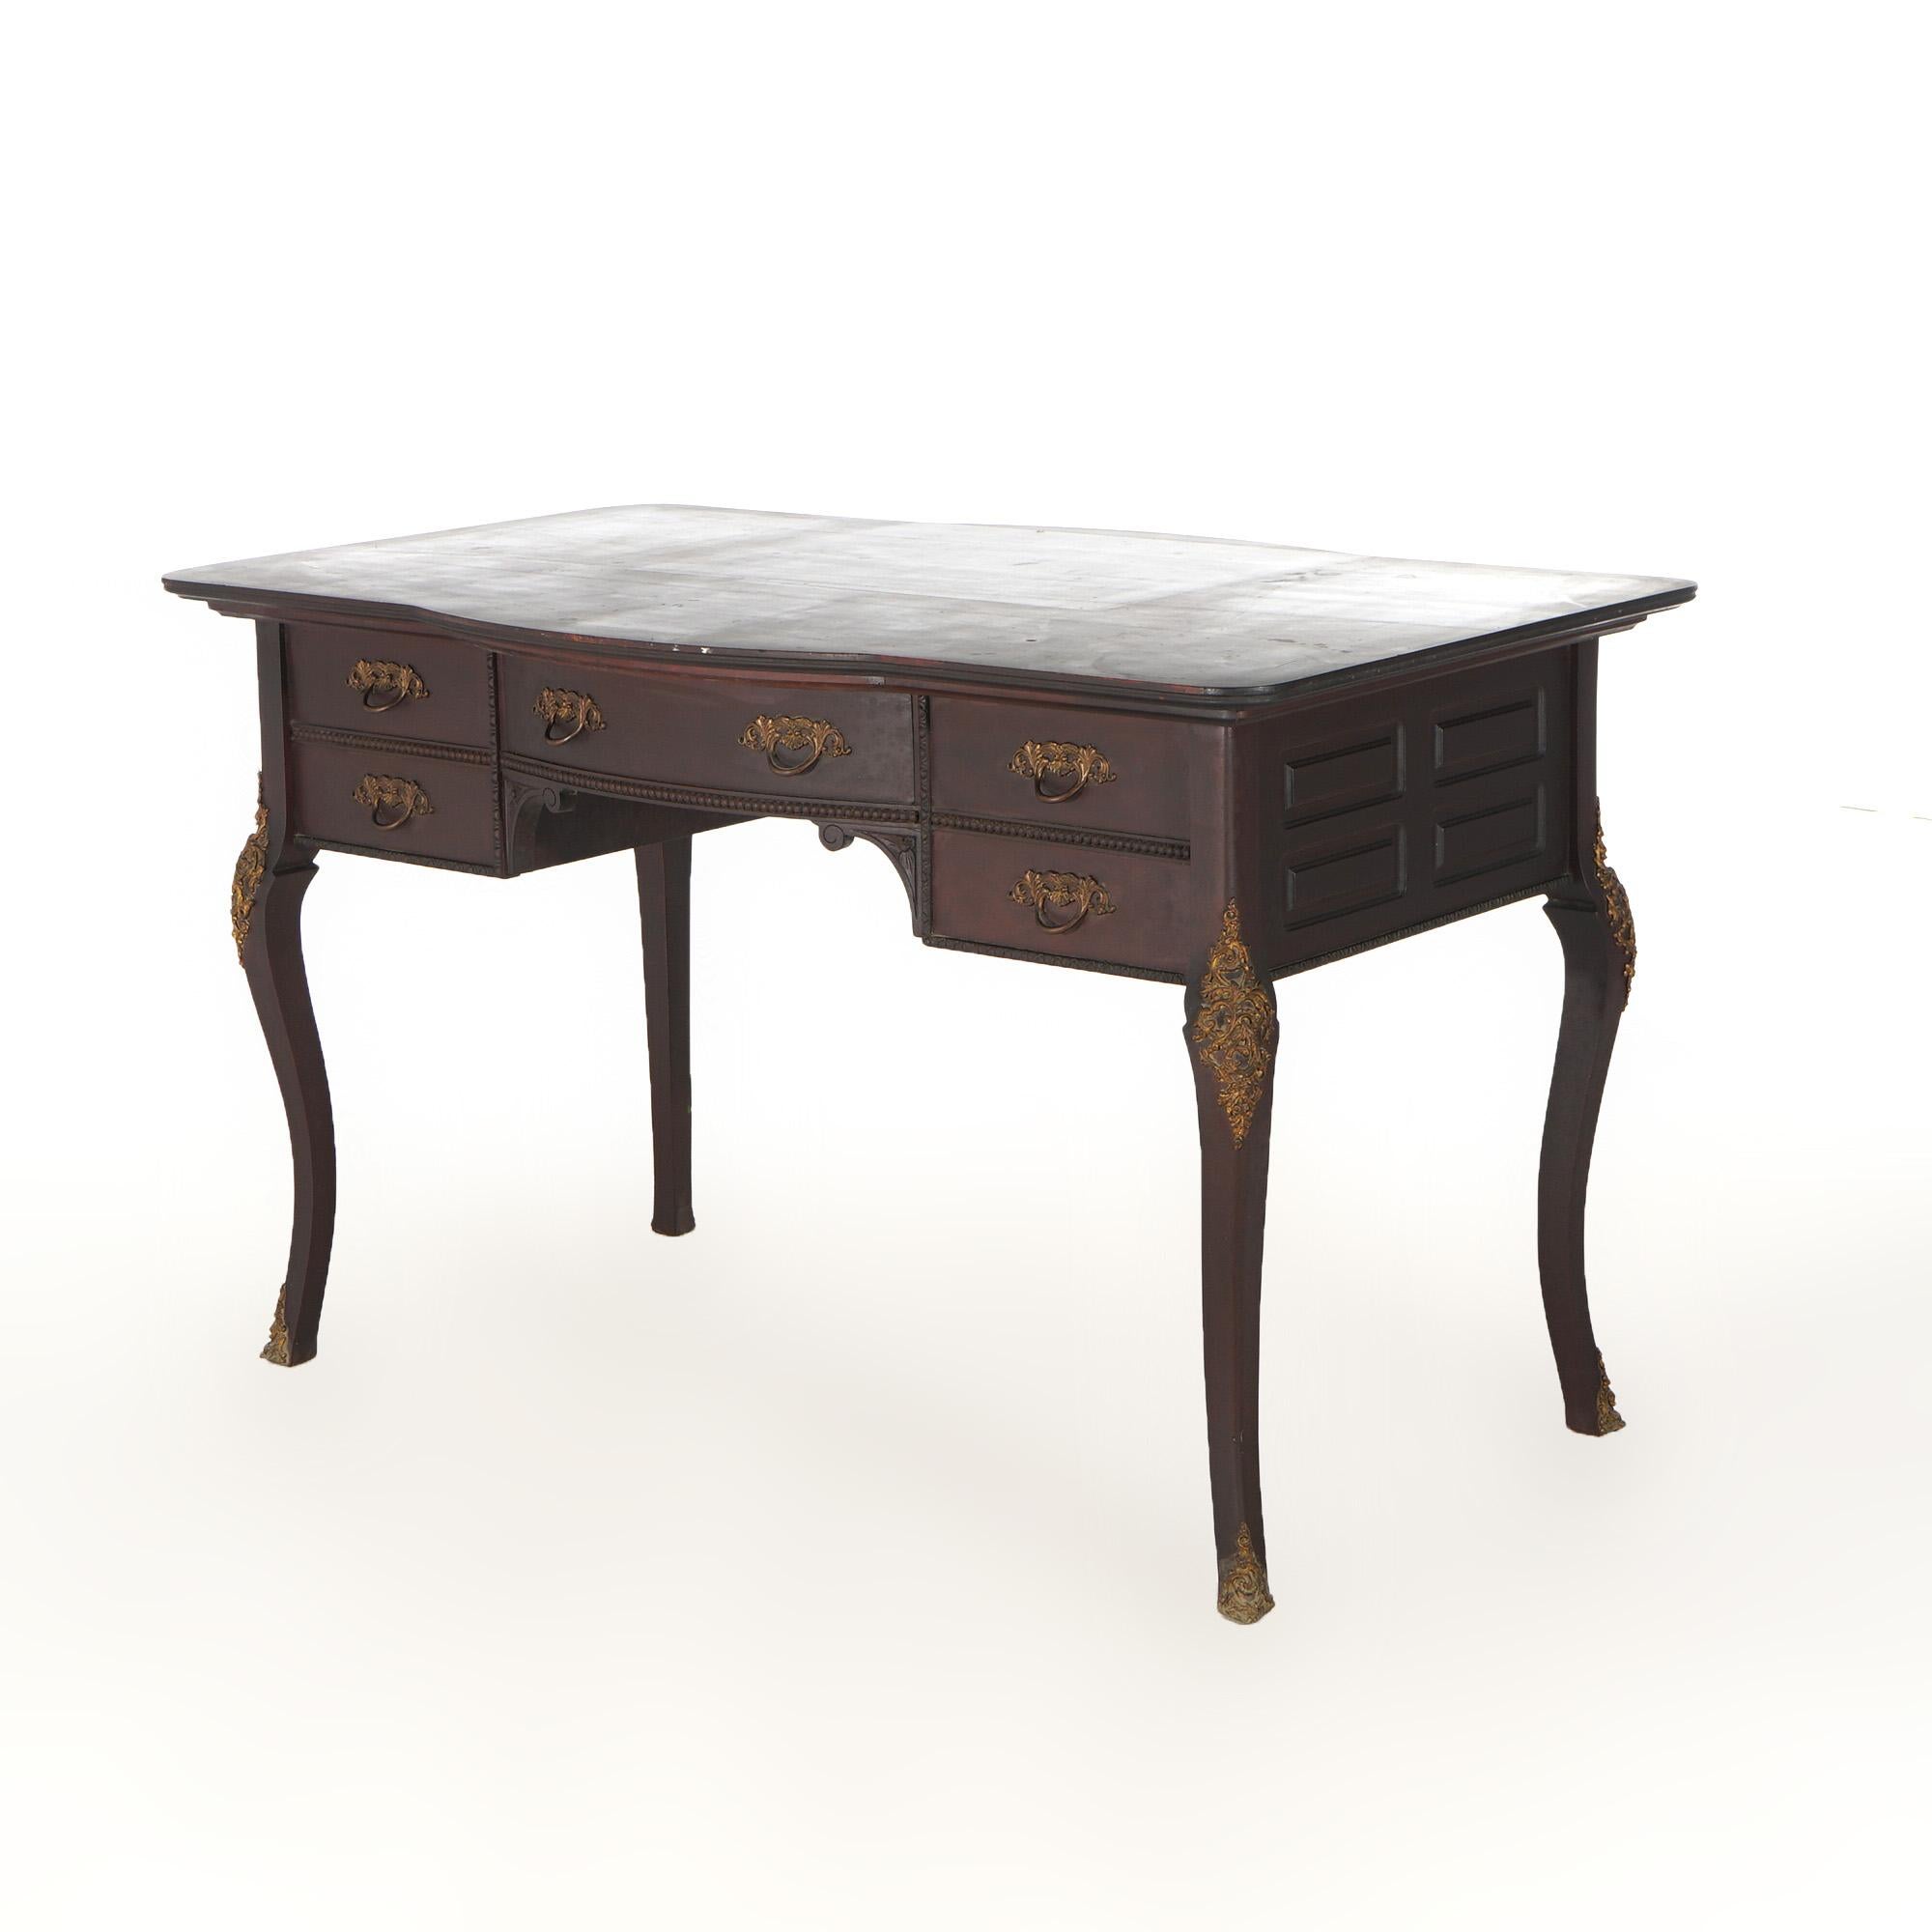 Antique French Mahogany & Ormolu Bureau Plat Writing Desk C1910 For Sale 16